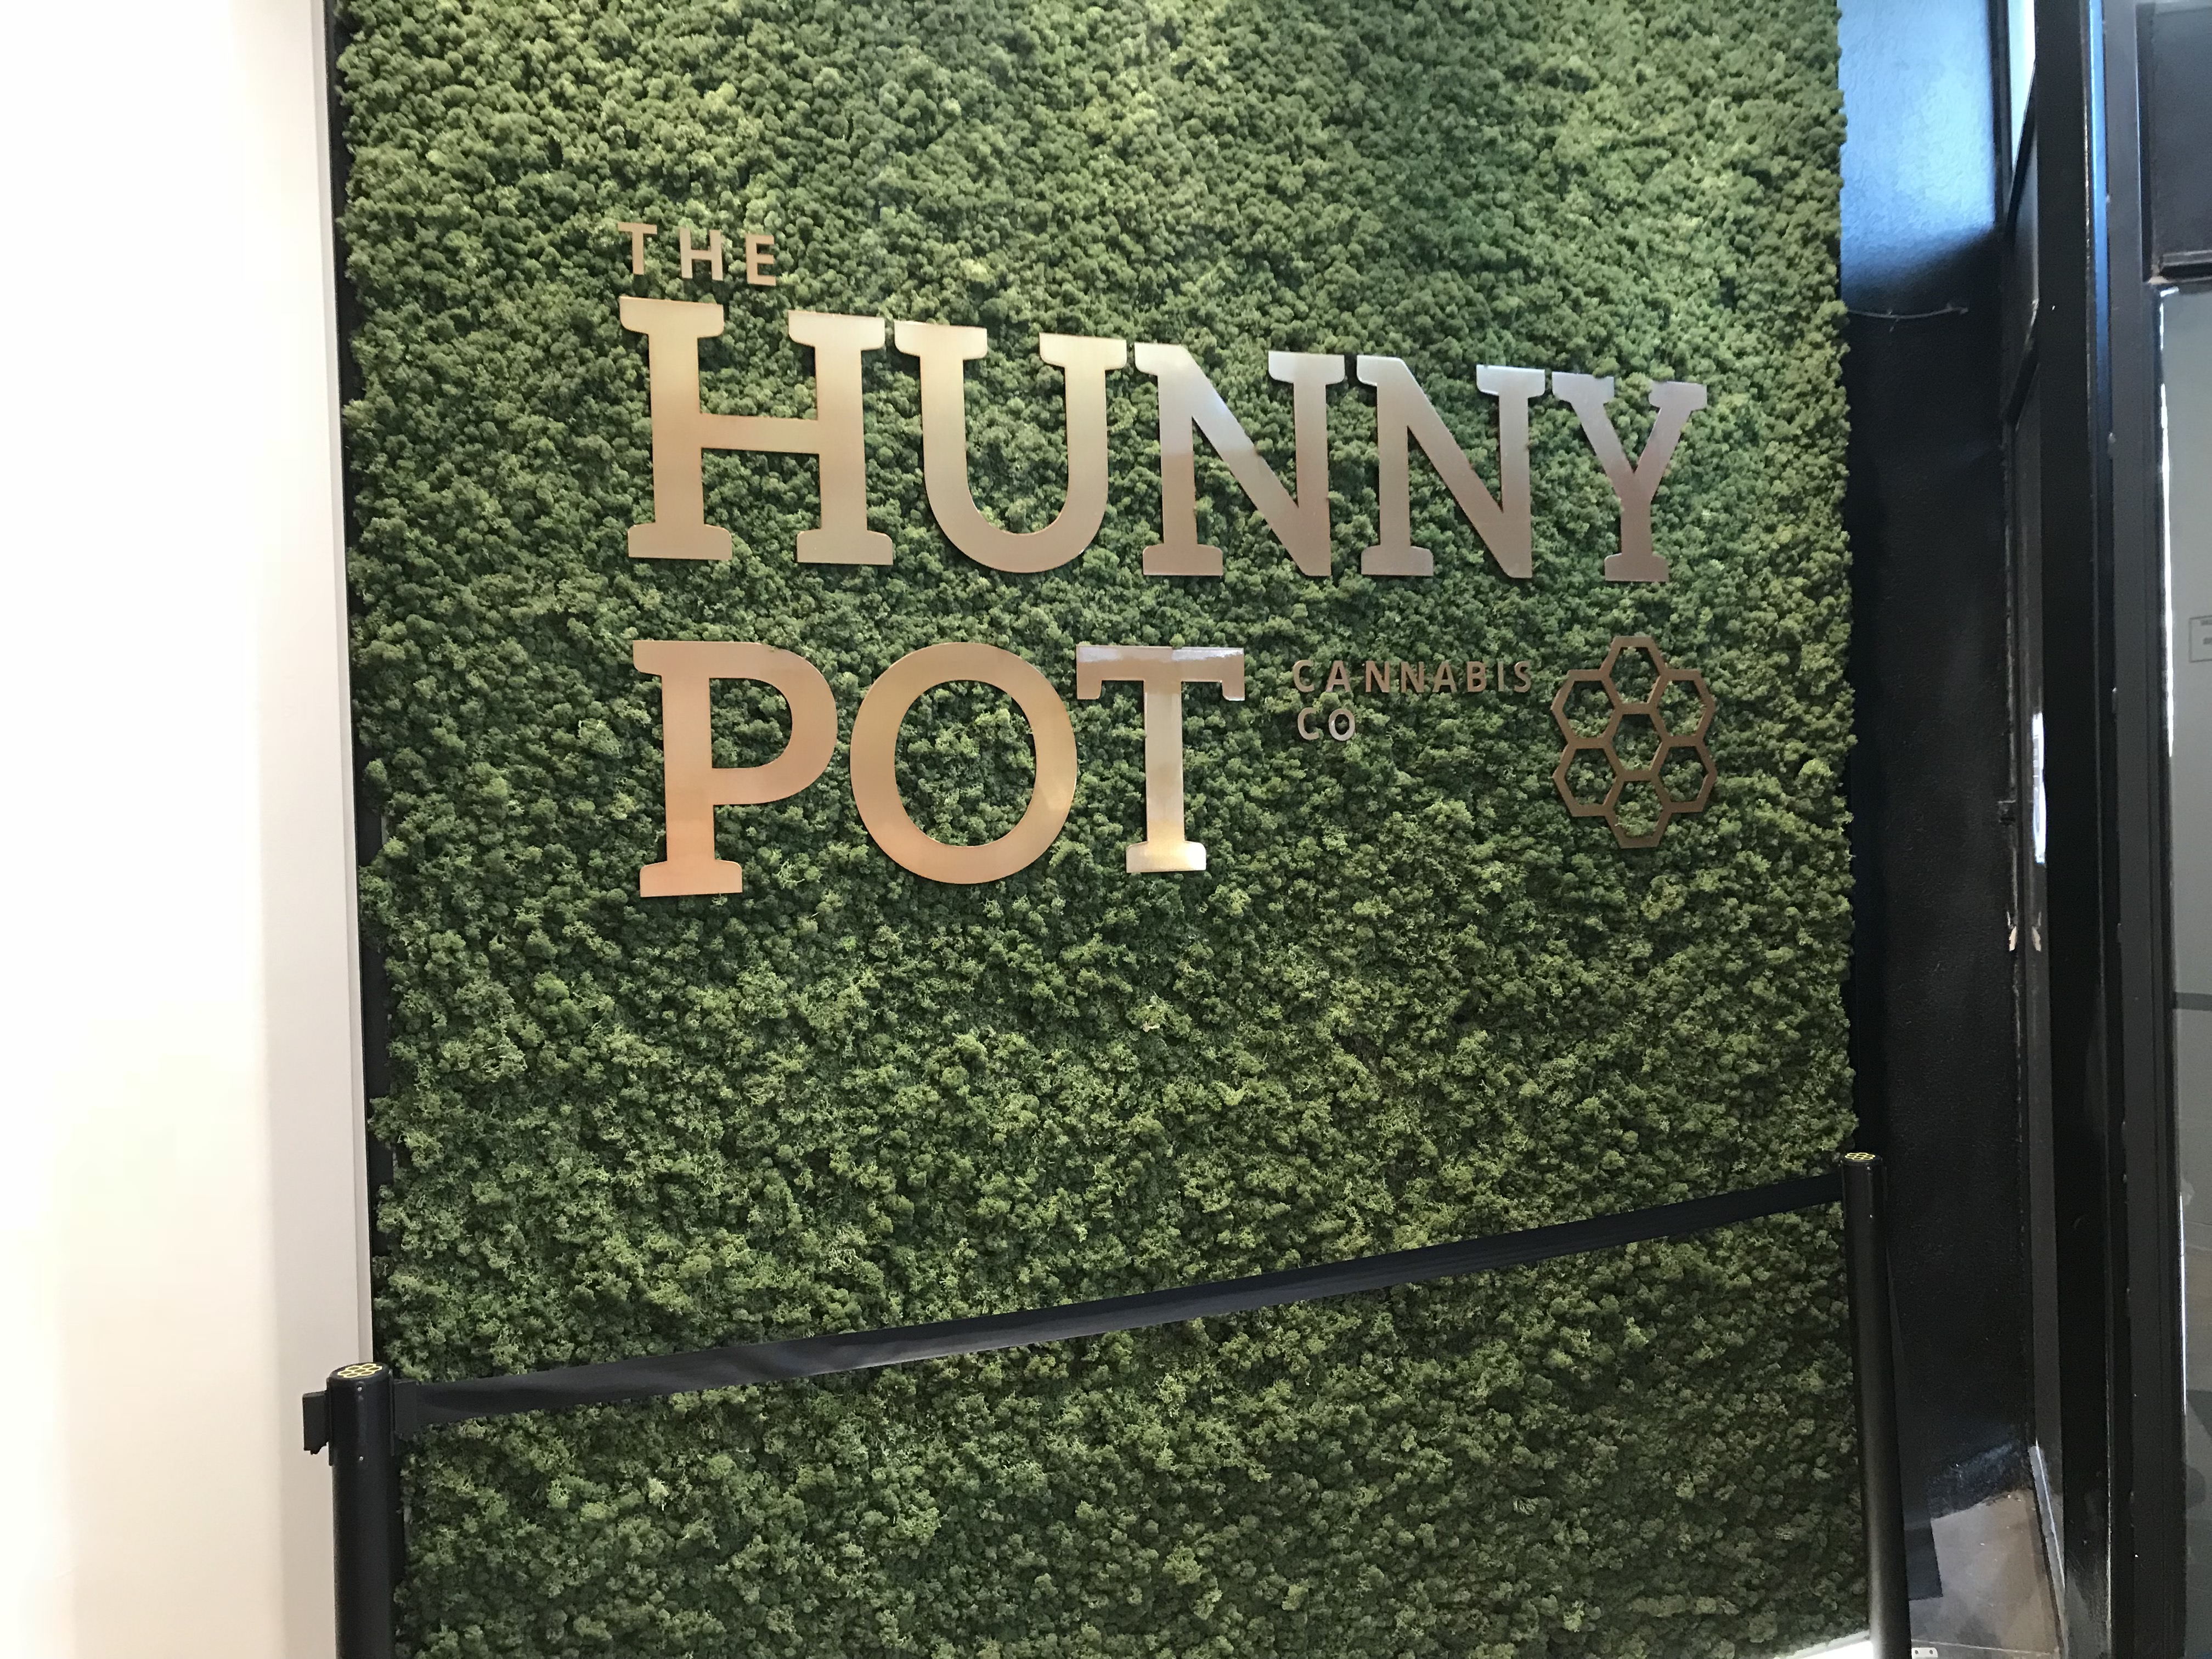 The Hunny Pot Cannabis